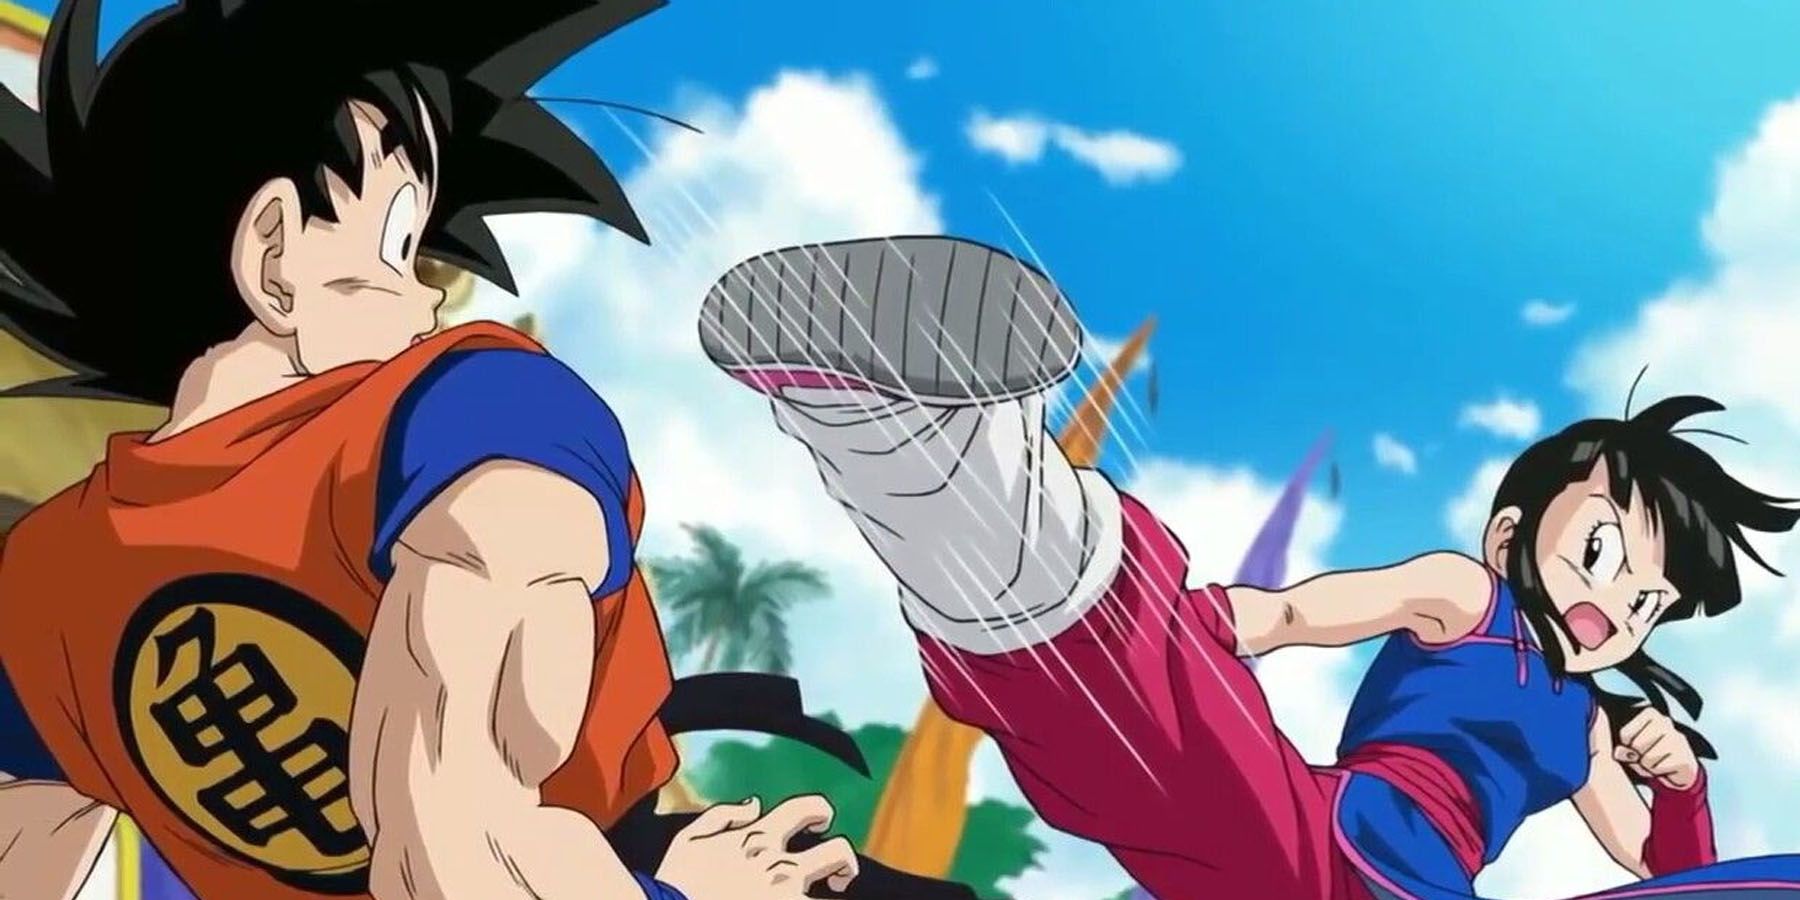 Goku fighting Chi Chi in a Tournament